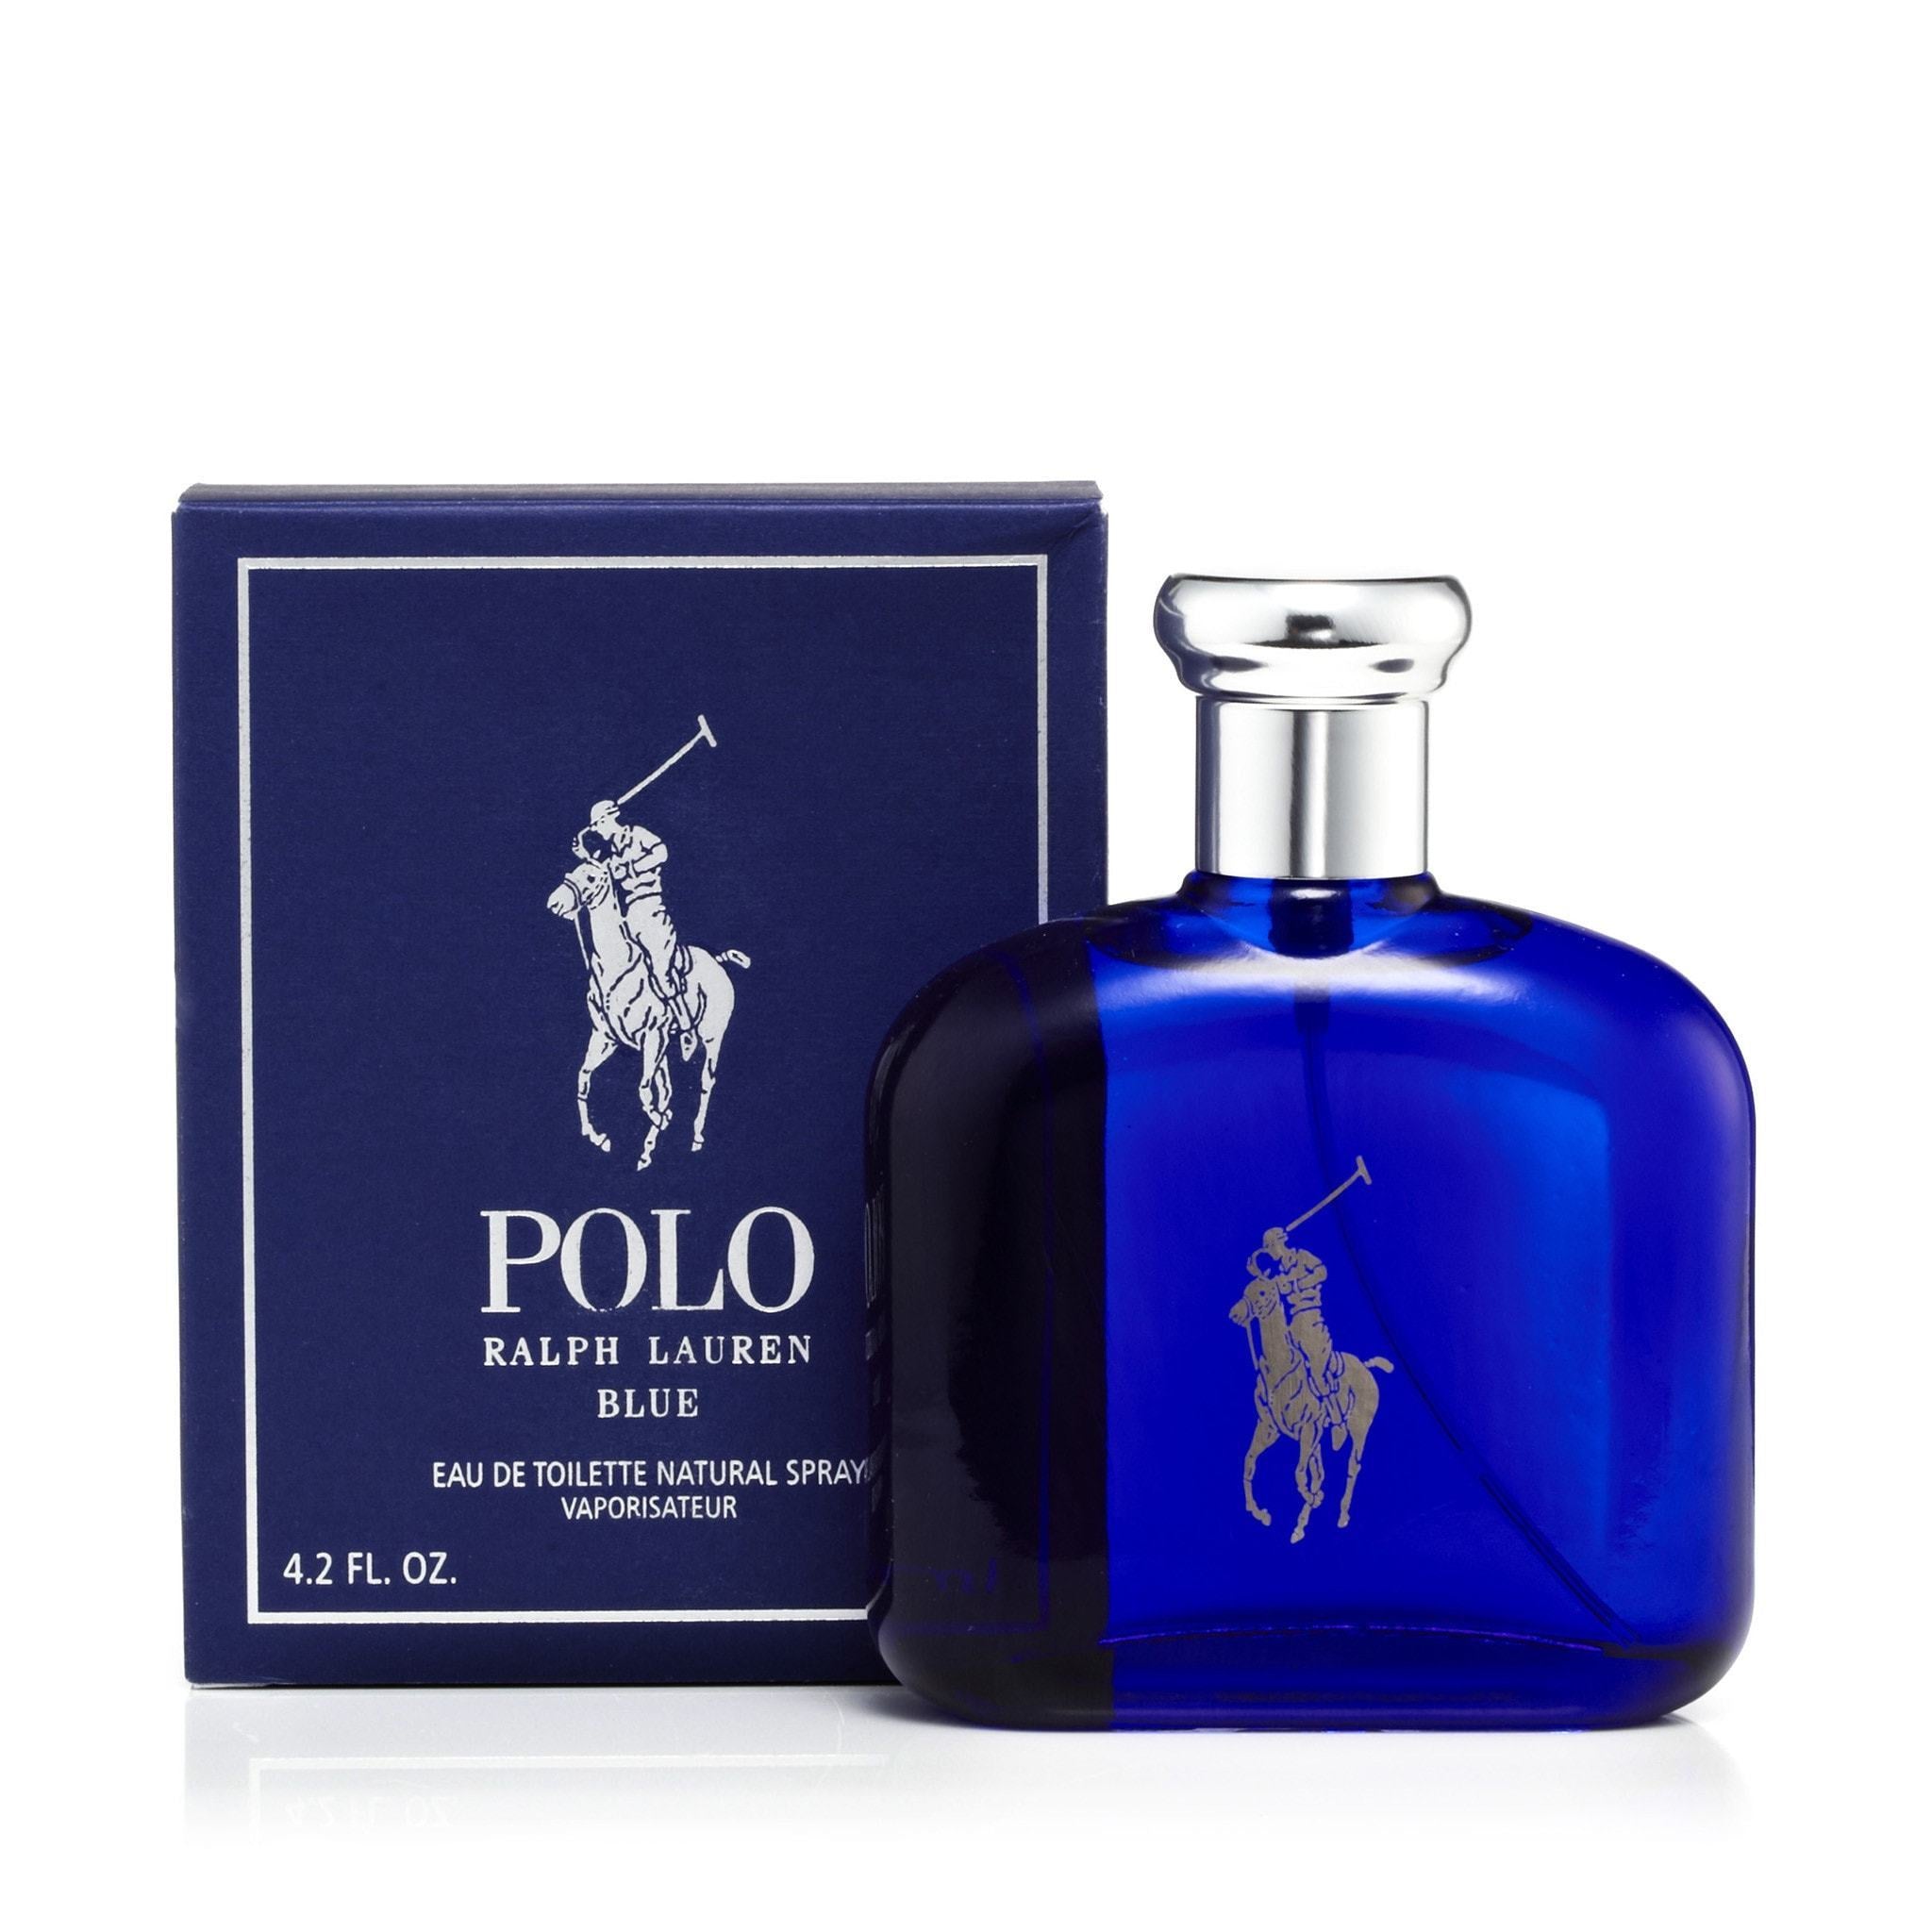 Polo Colognes & Ralph Lauren Perfume Collections | Perfumania